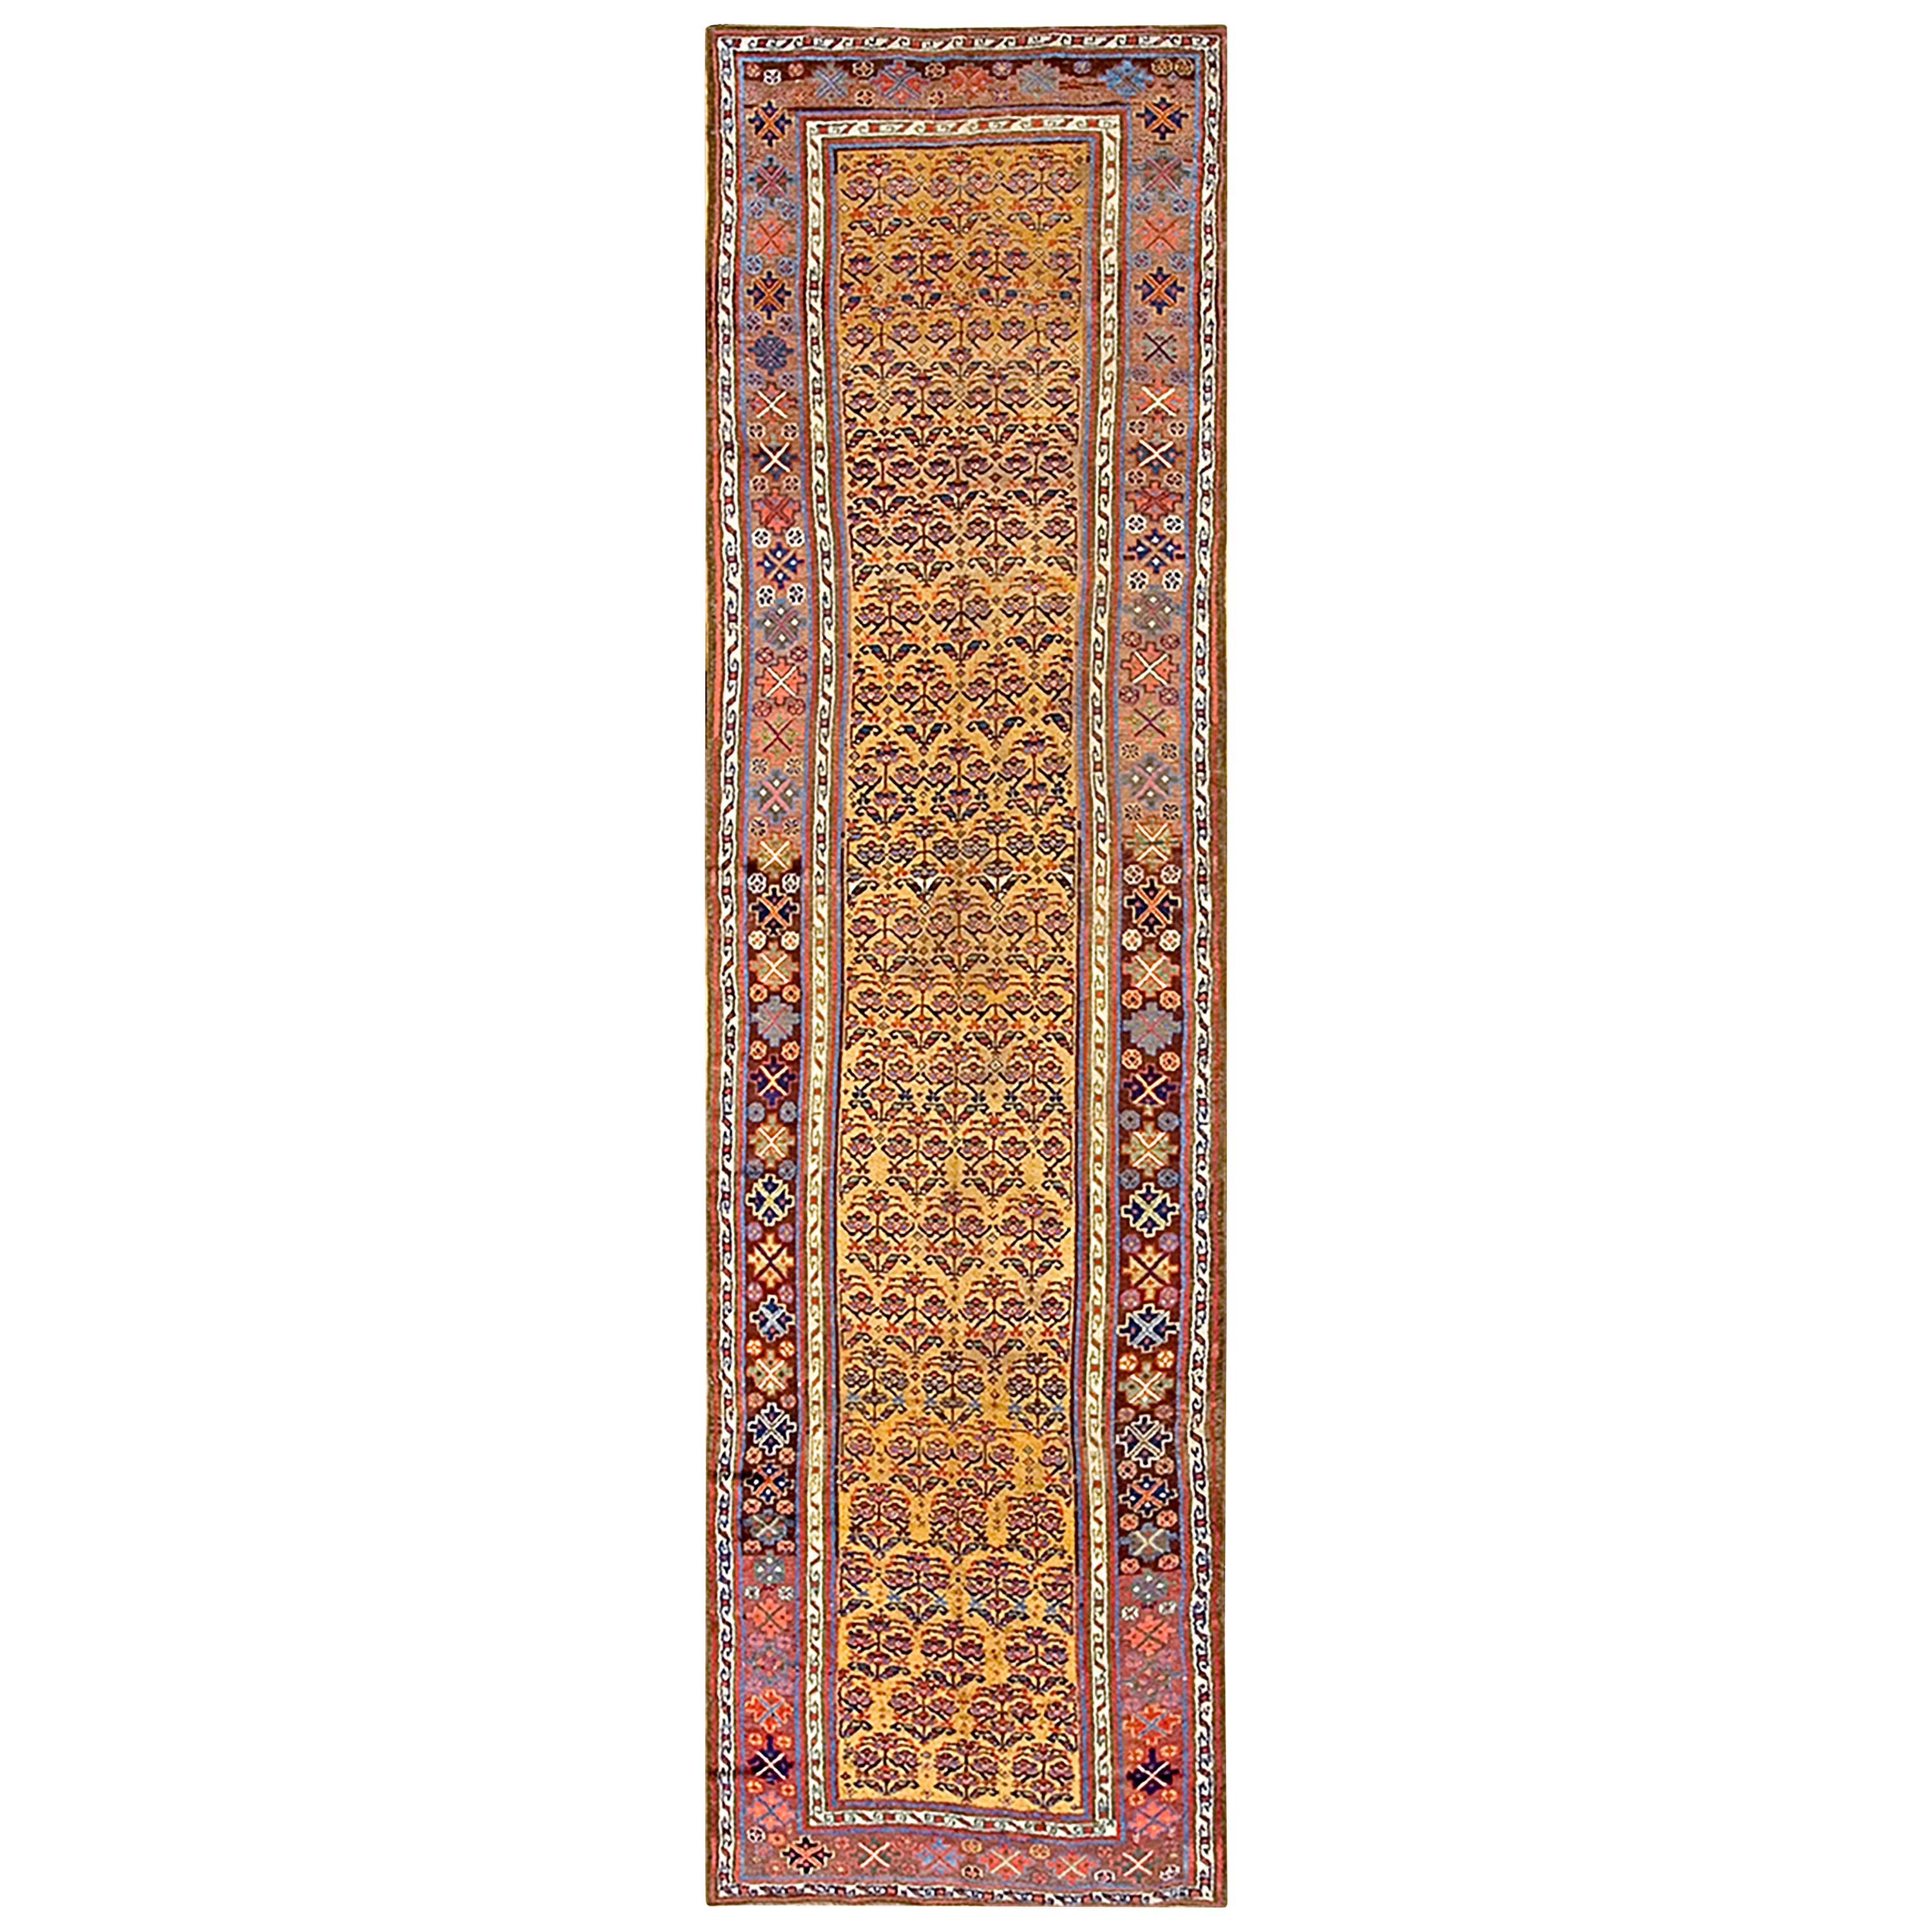 19th Century W. Persian Kurdish Rug ( 3'10" x 13'7" - 117 x 414 ) For Sale